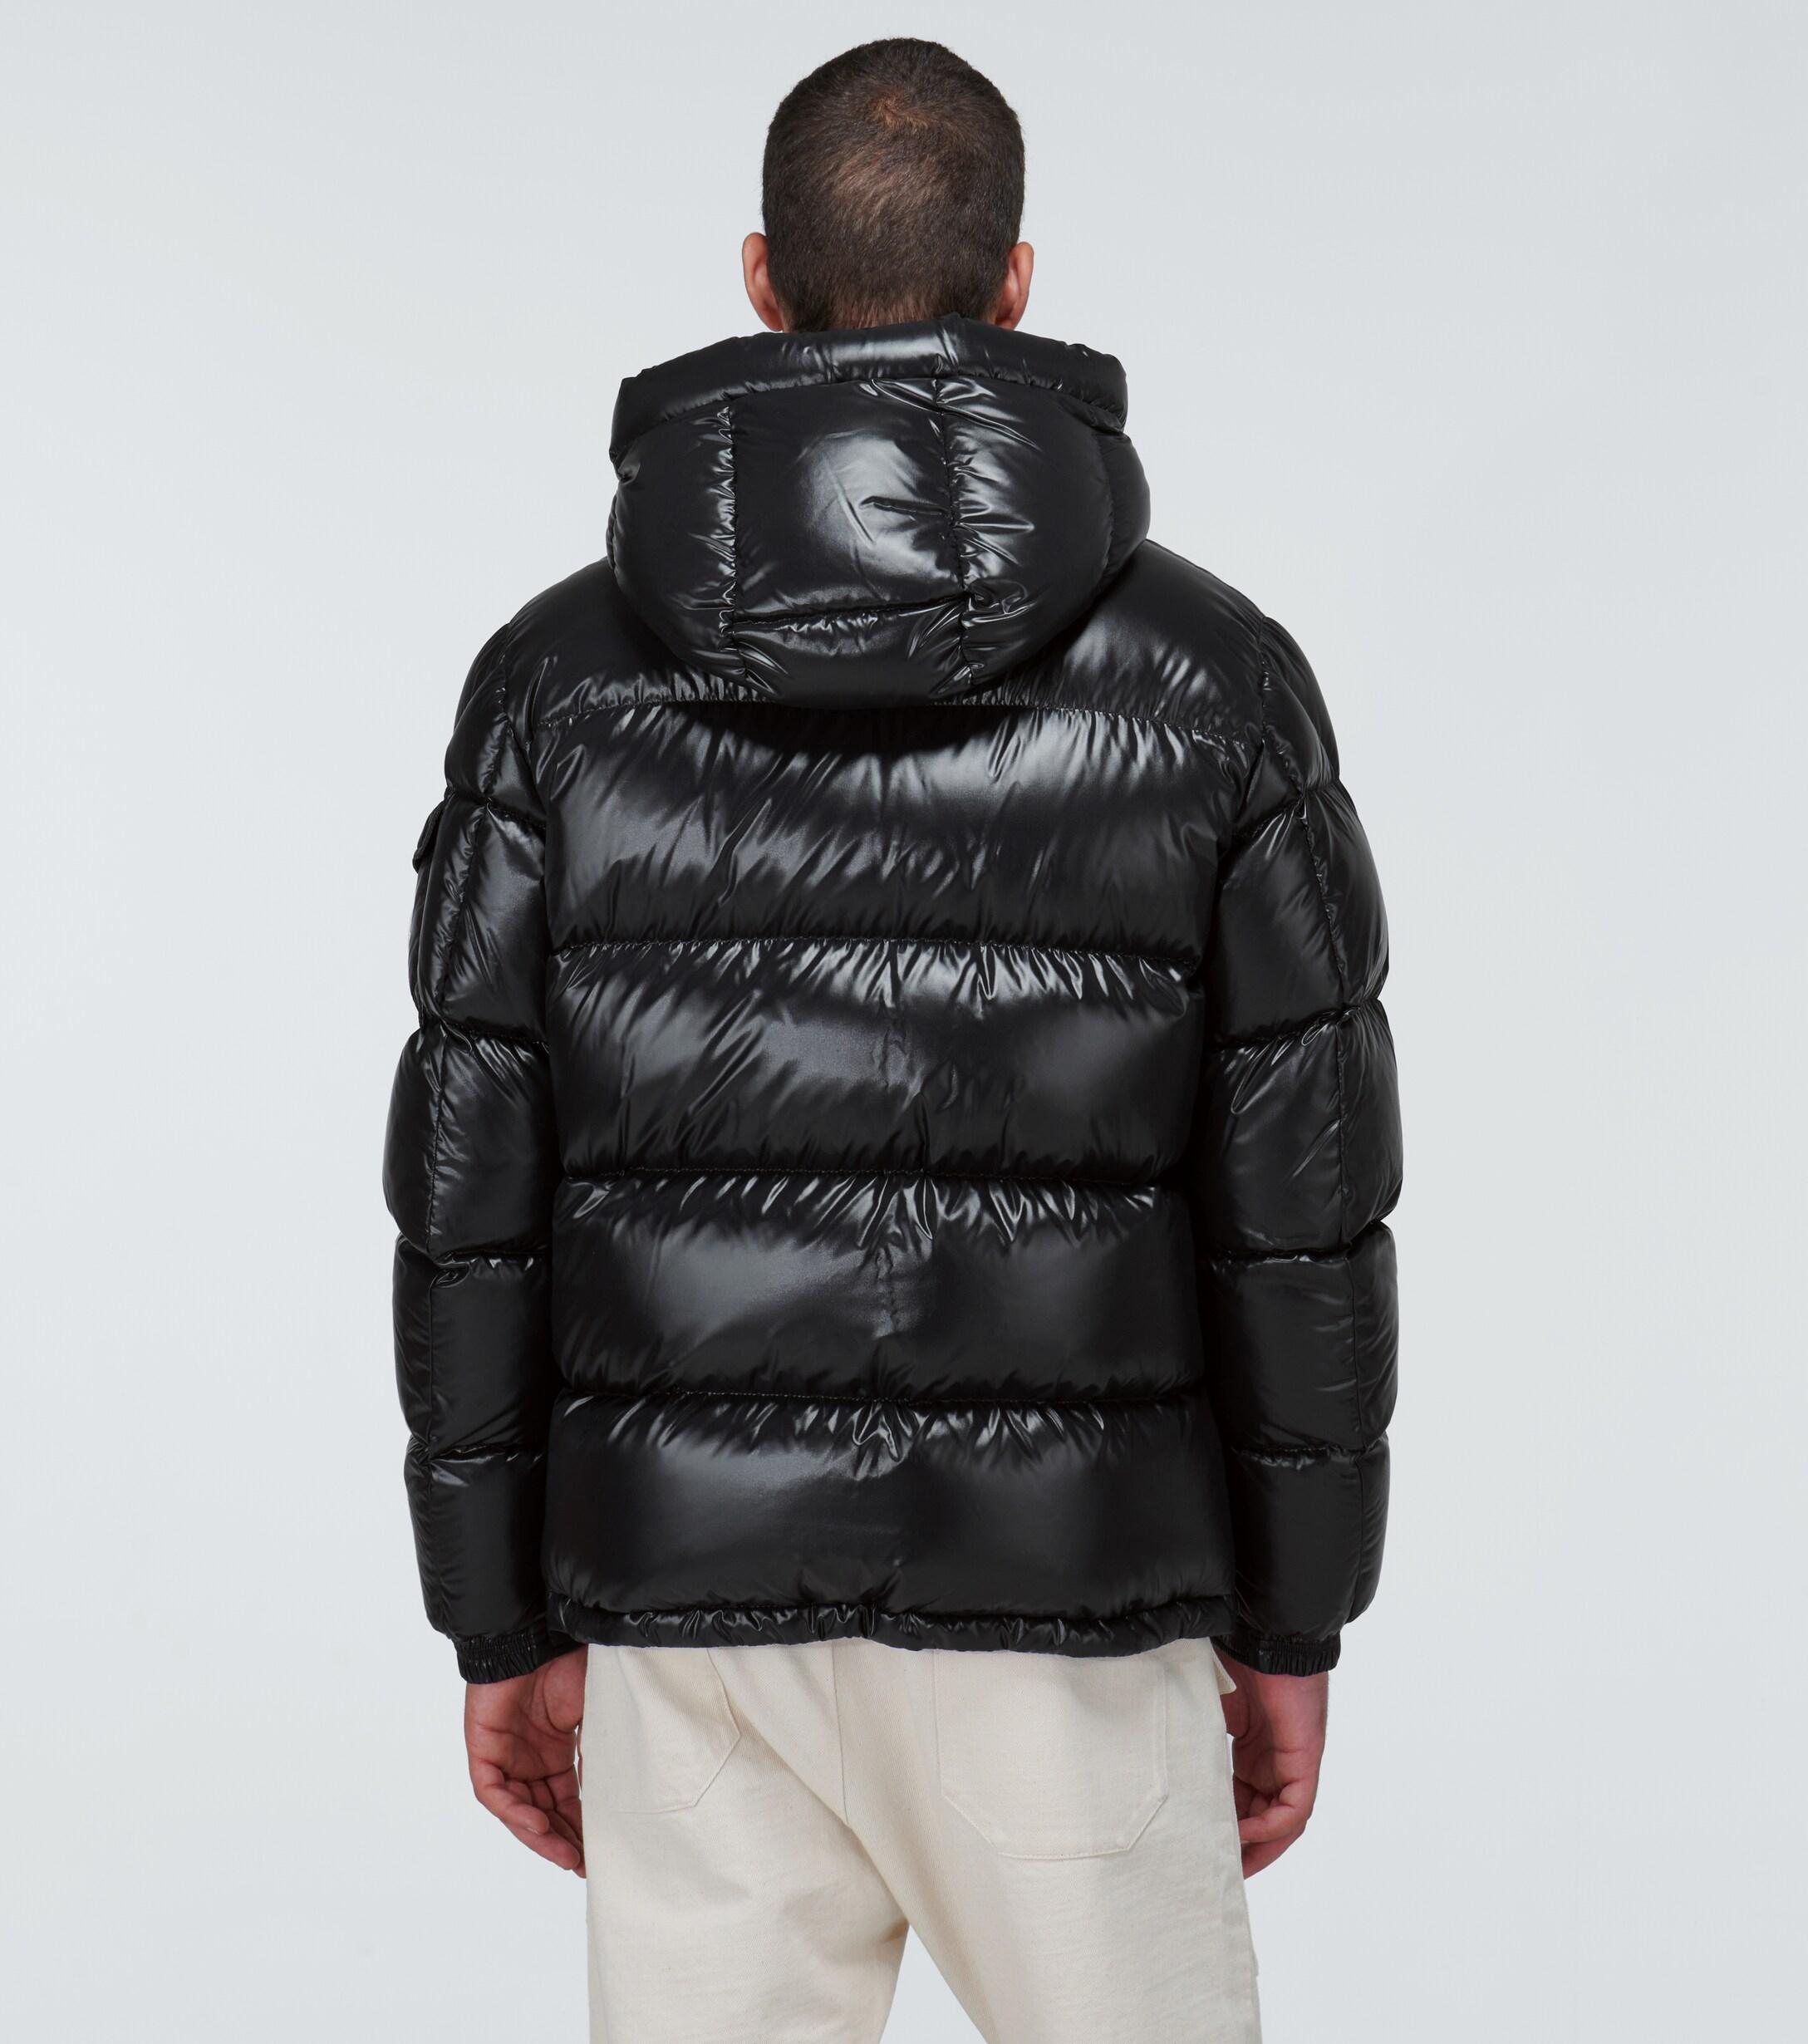 Moncler Synthetic Ecrins Down-filled Jacket in Black for Men - Lyst